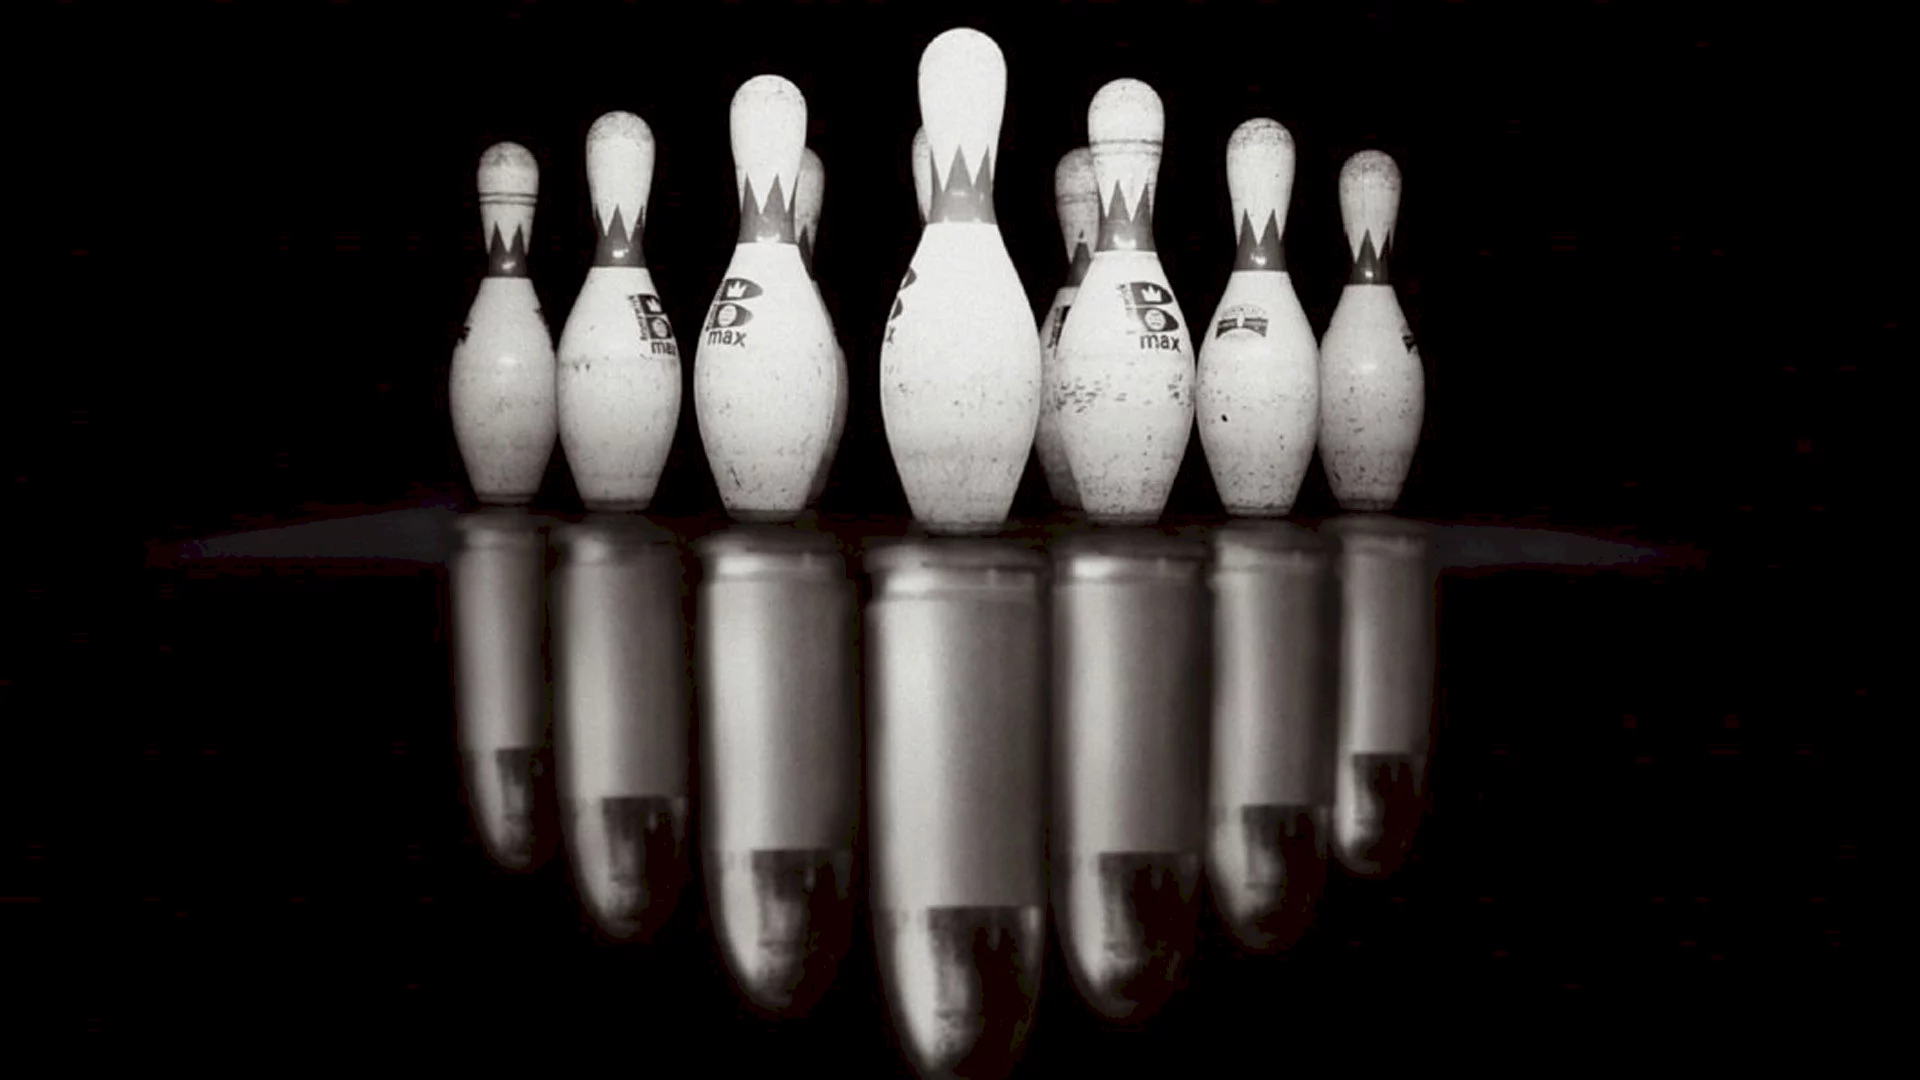 Photo du film : Bowling for Columbine